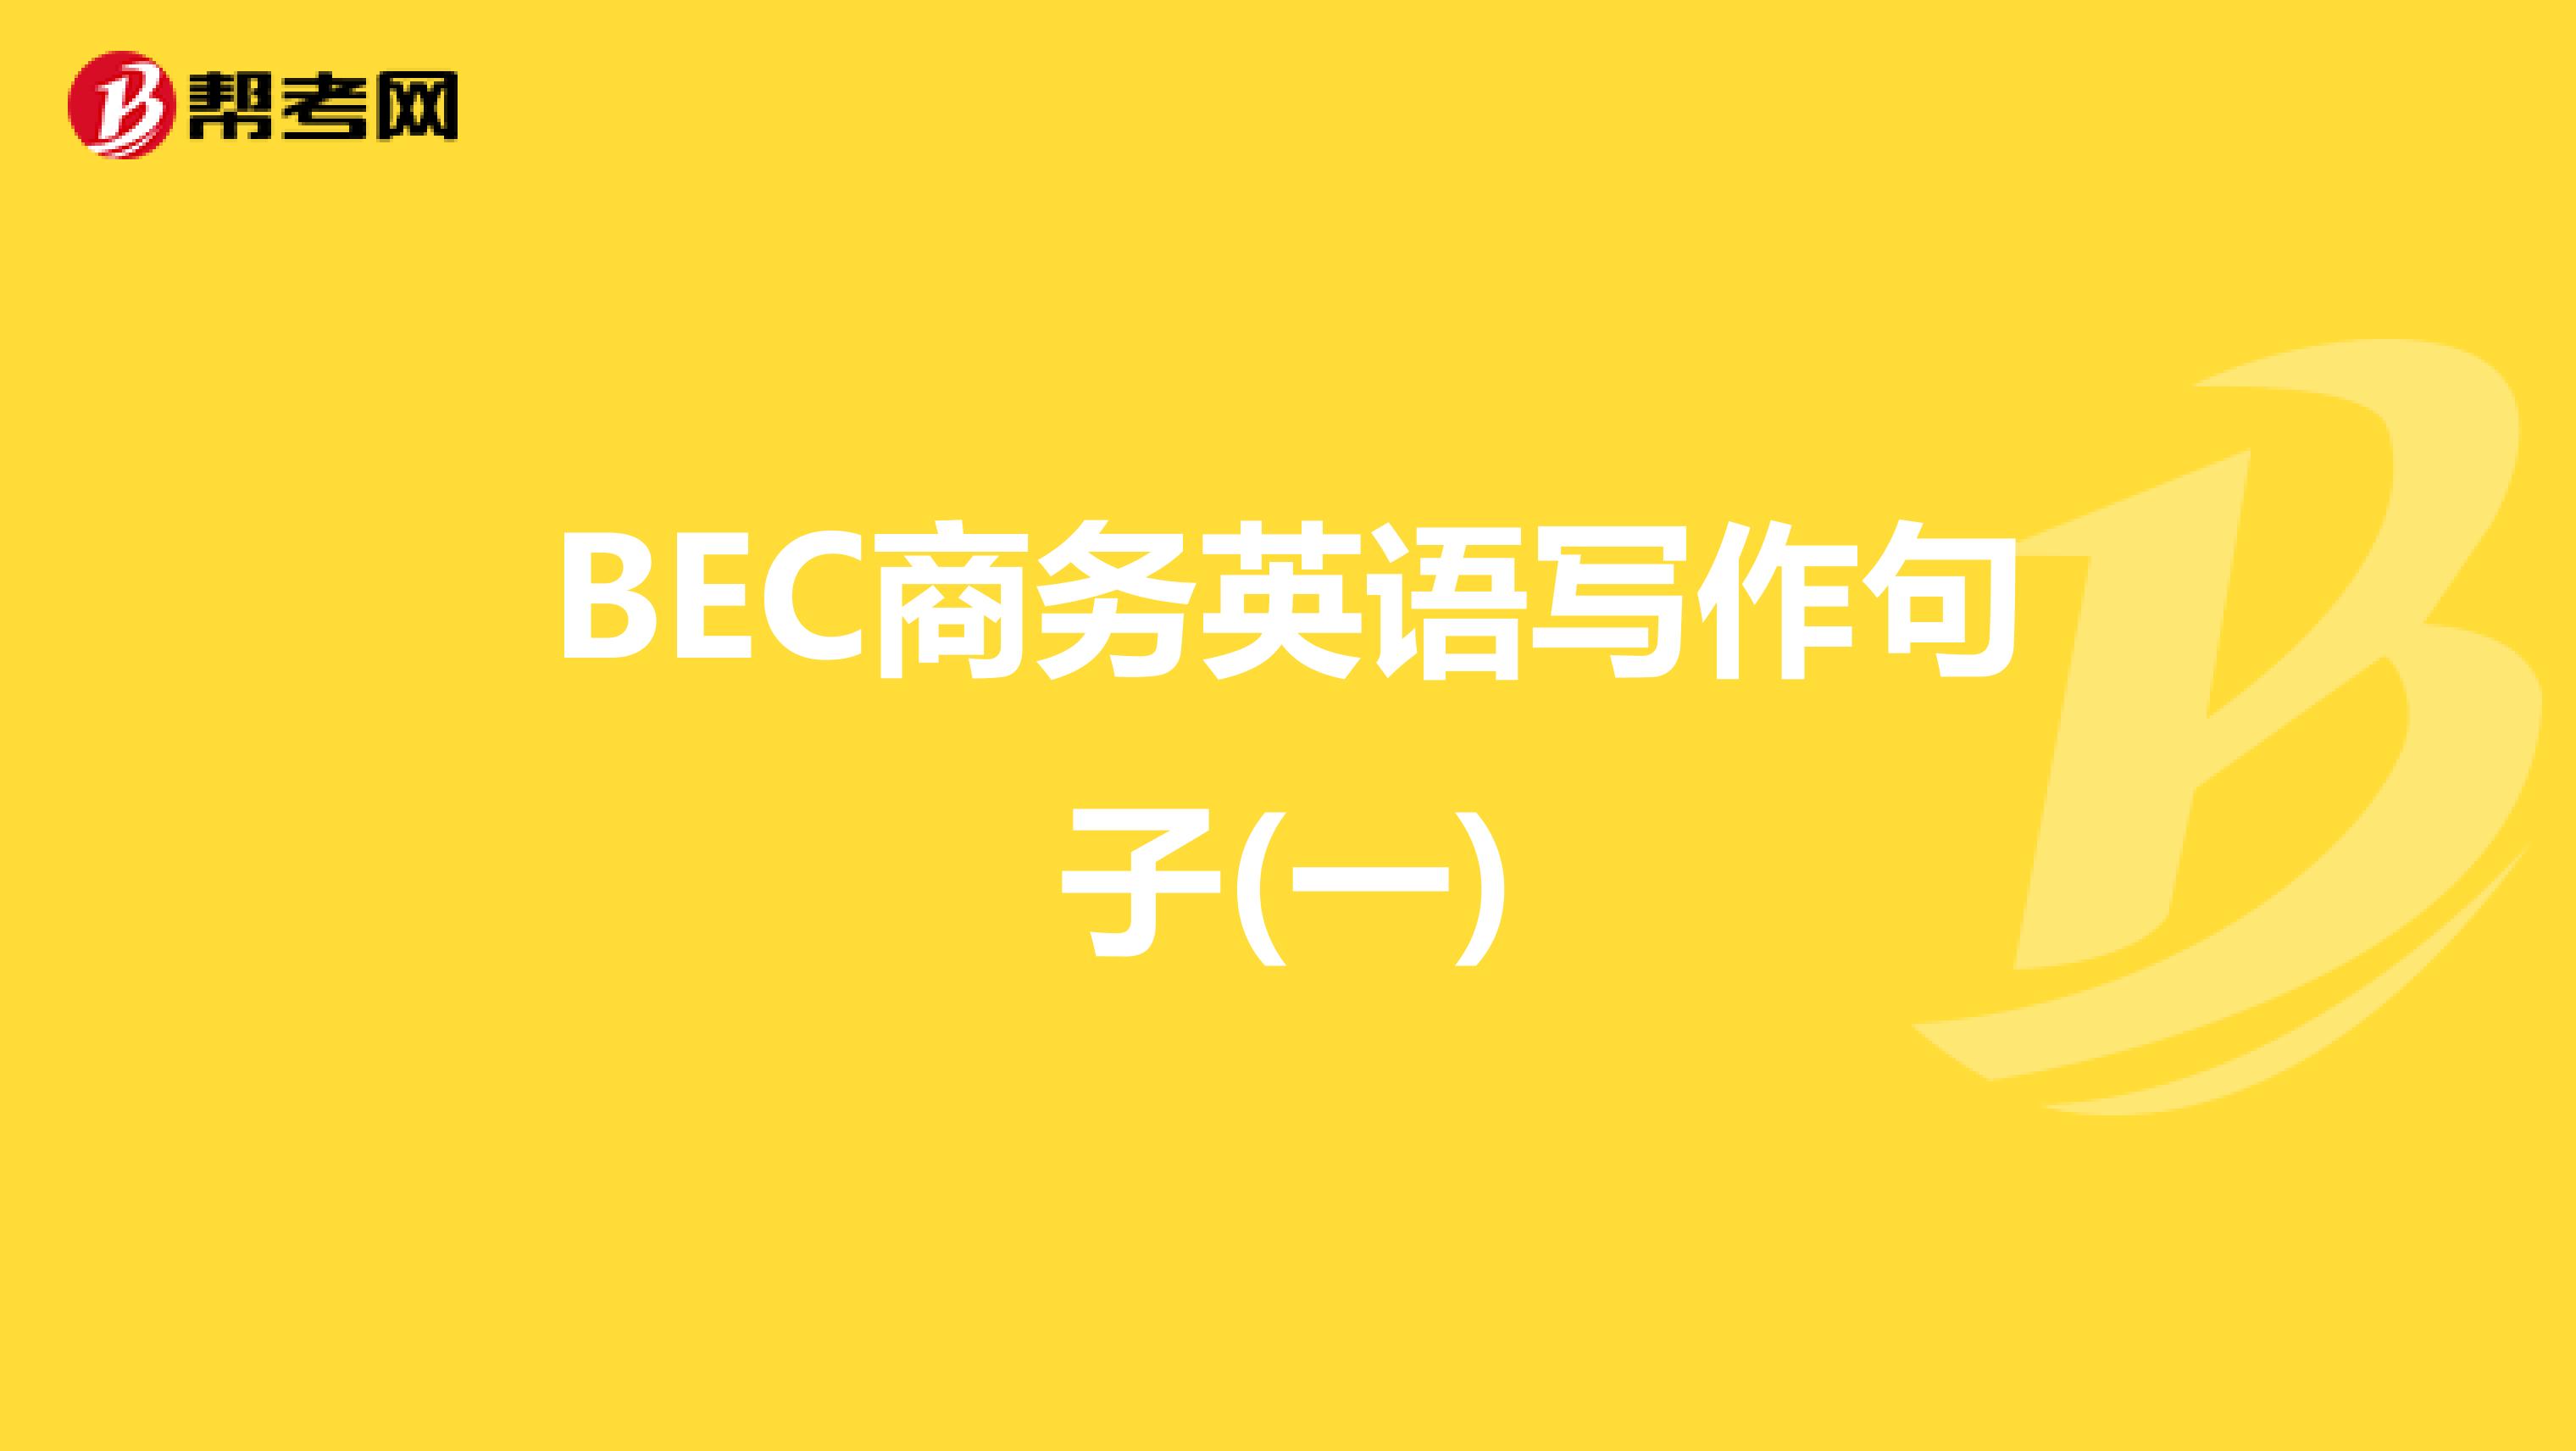 BEC商务英语写作句子(一)